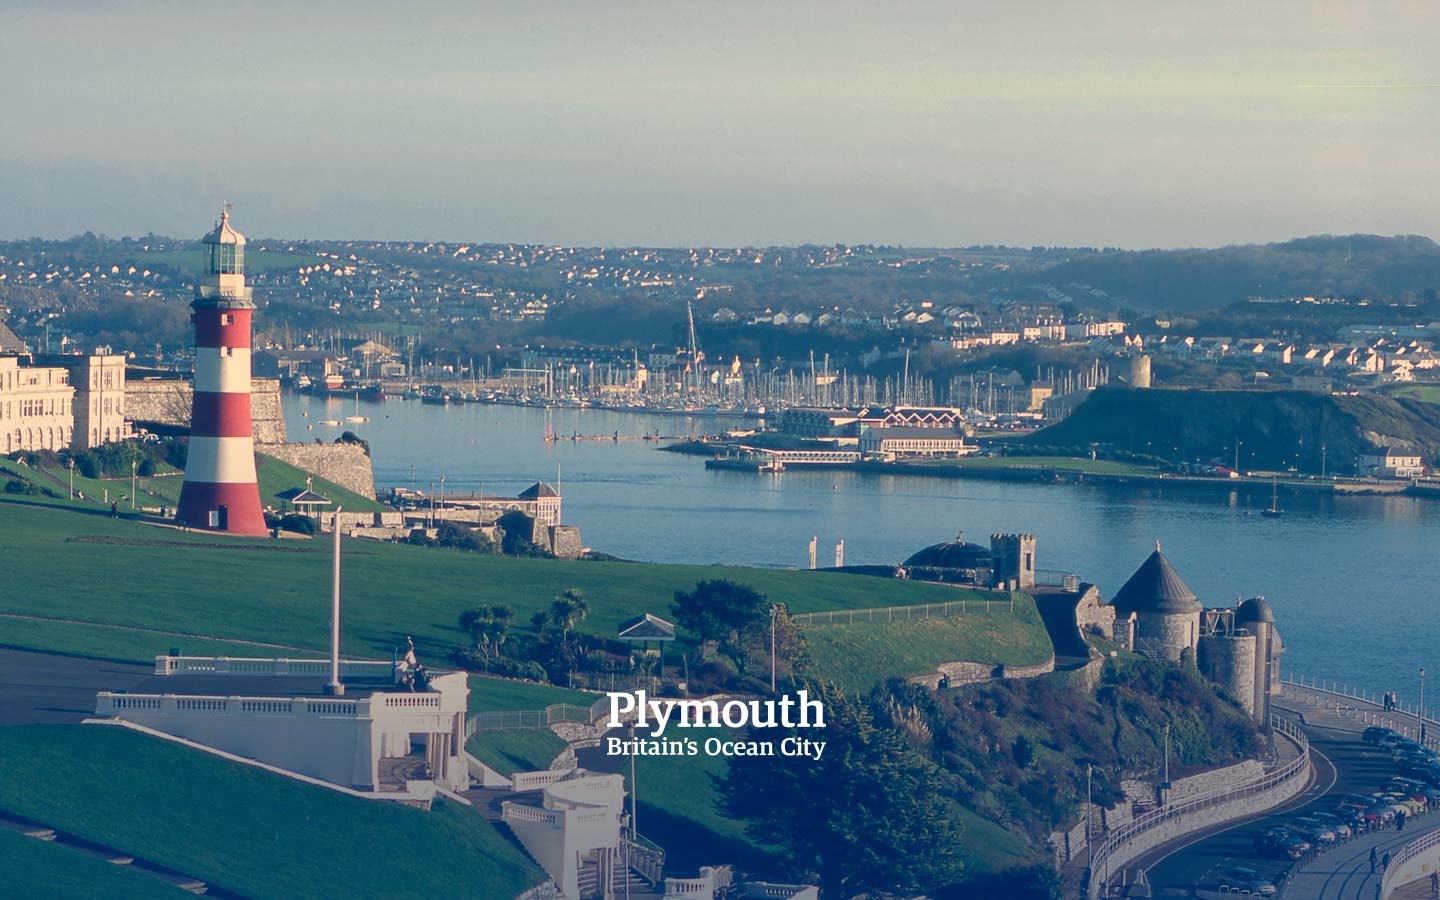 Plymouth - Britain’s Ocean City